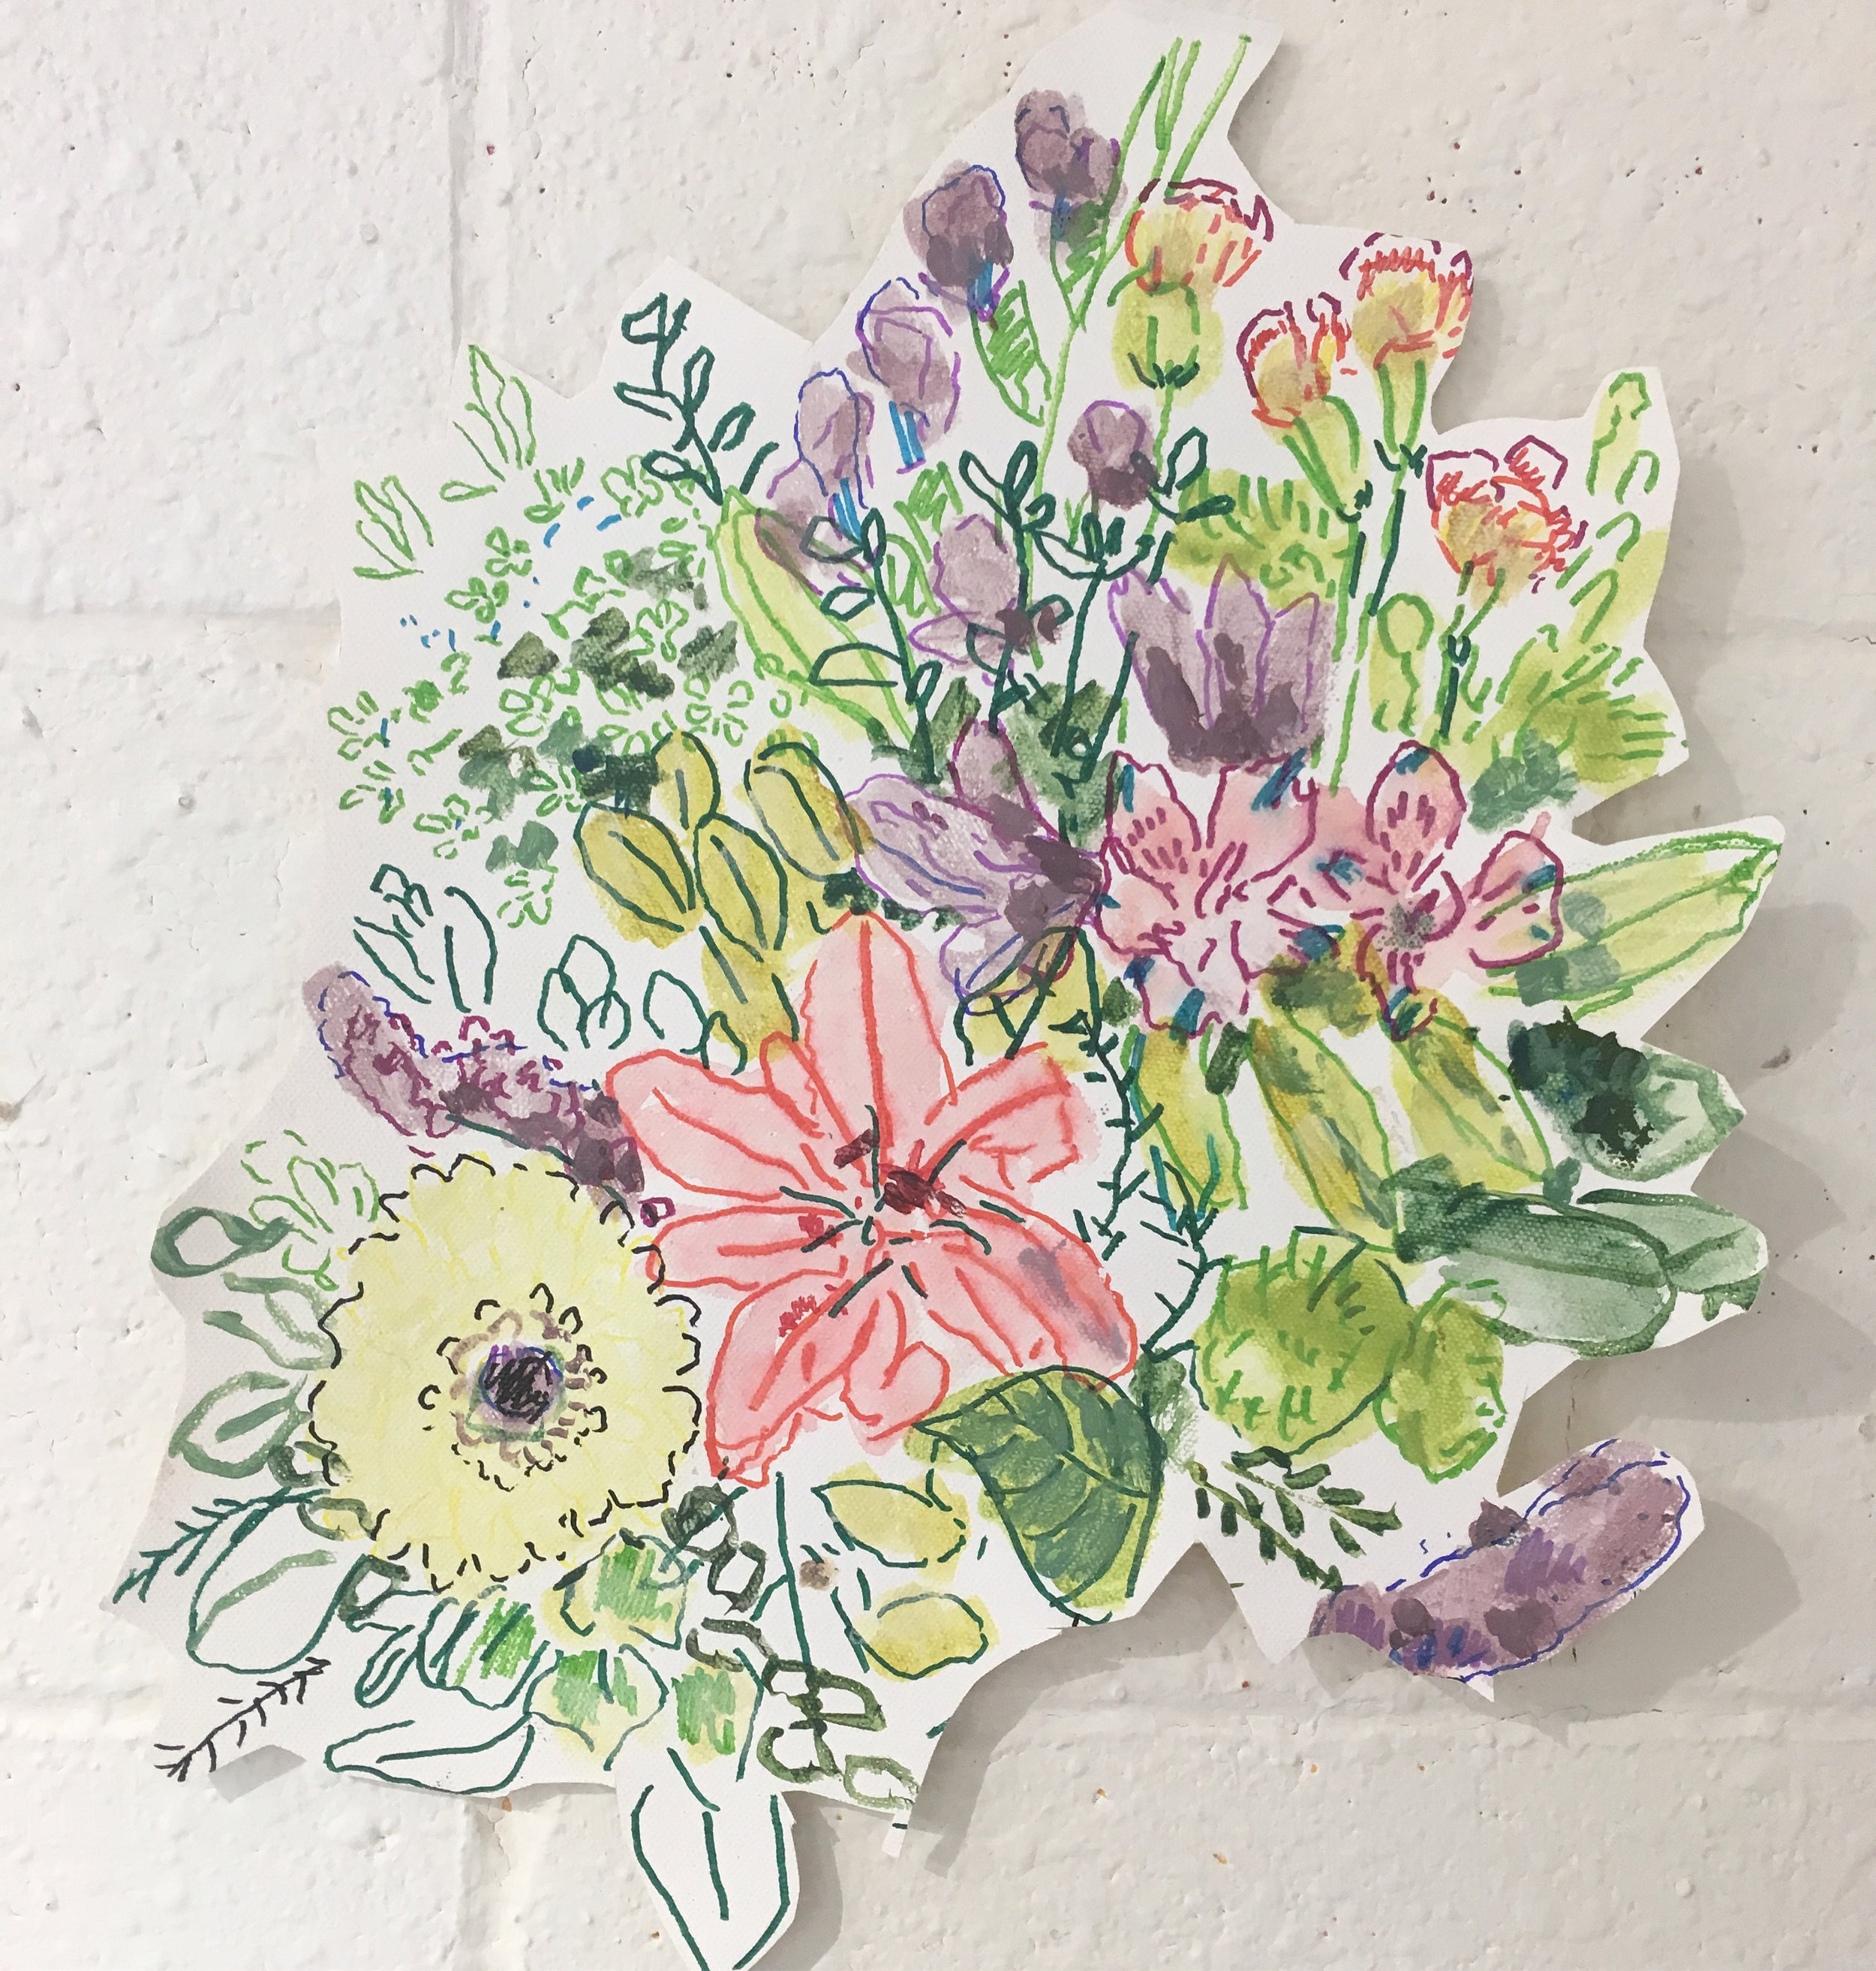 Dark Floral Peony Flower Drawing Wallpaper Mural • Wallmur®